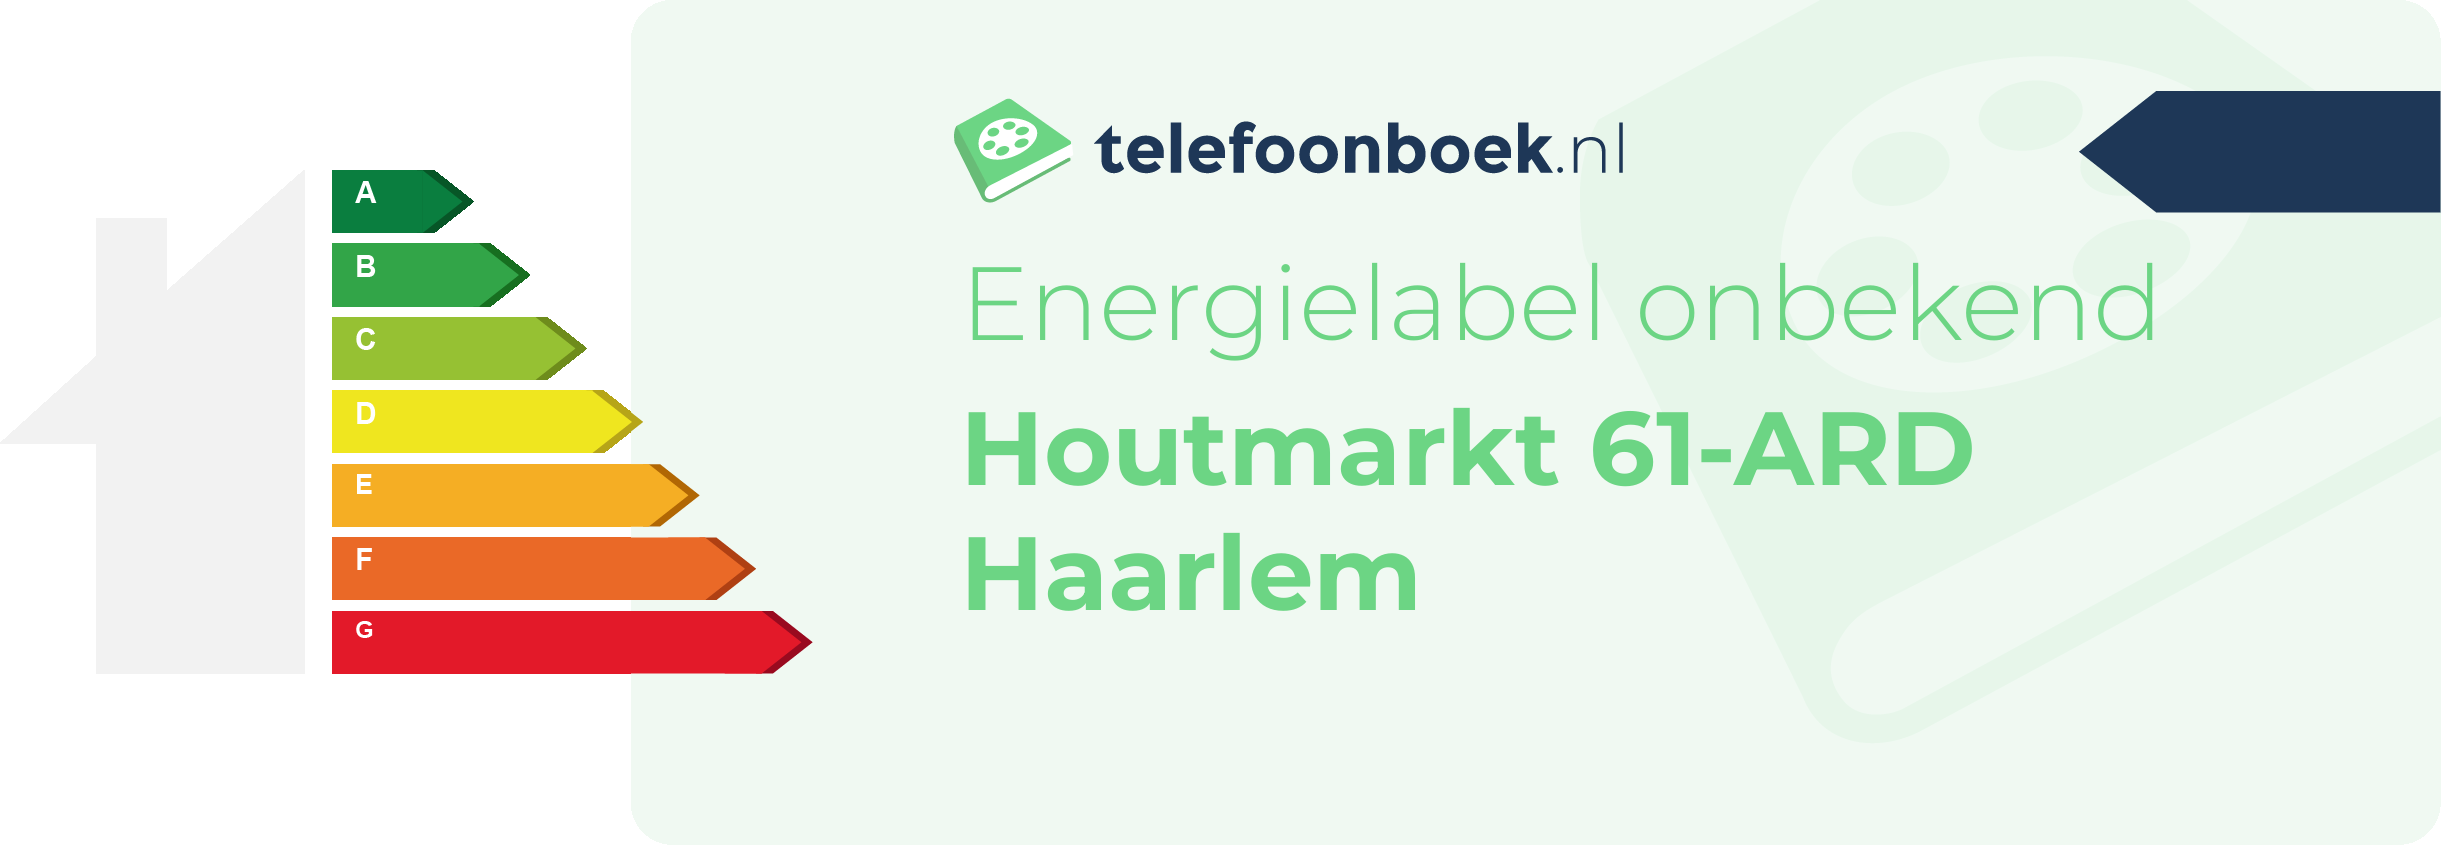 Energielabel Houtmarkt 61-ARD Haarlem